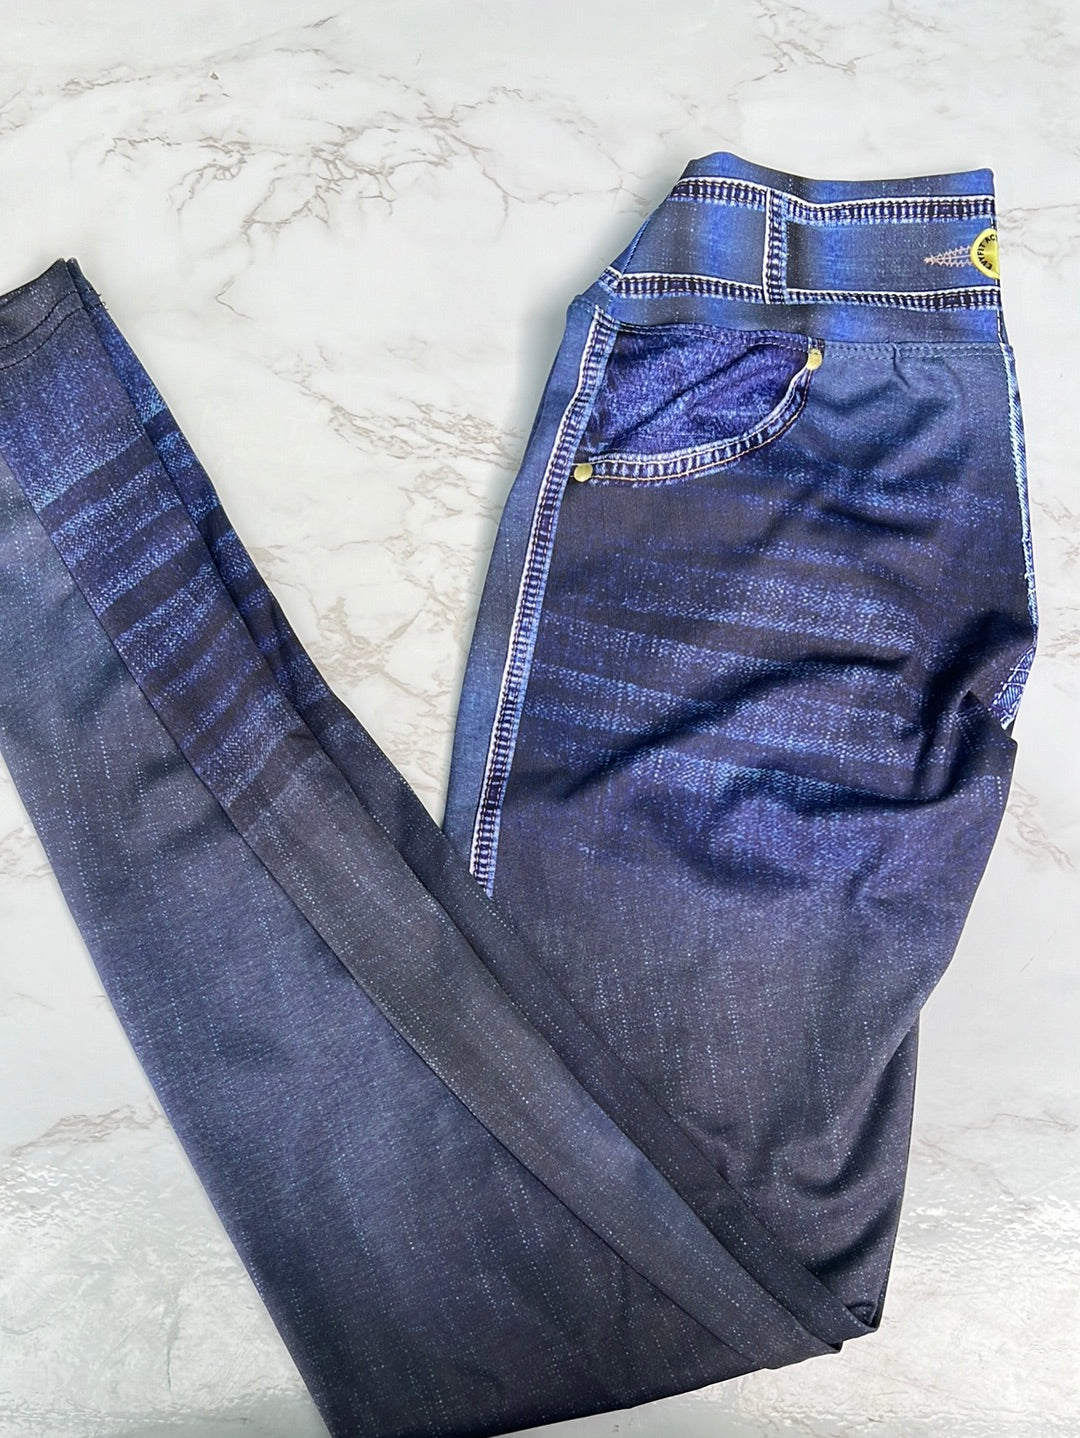 Denim Jeans Denim High Waist Hose Slim Fit Jeans, Skinny Fit Jeans Light  Blue Denim, Loren Distressed Rip Knee Skinny Jeans with Stock Photo - Image  of background, denim: 165624236